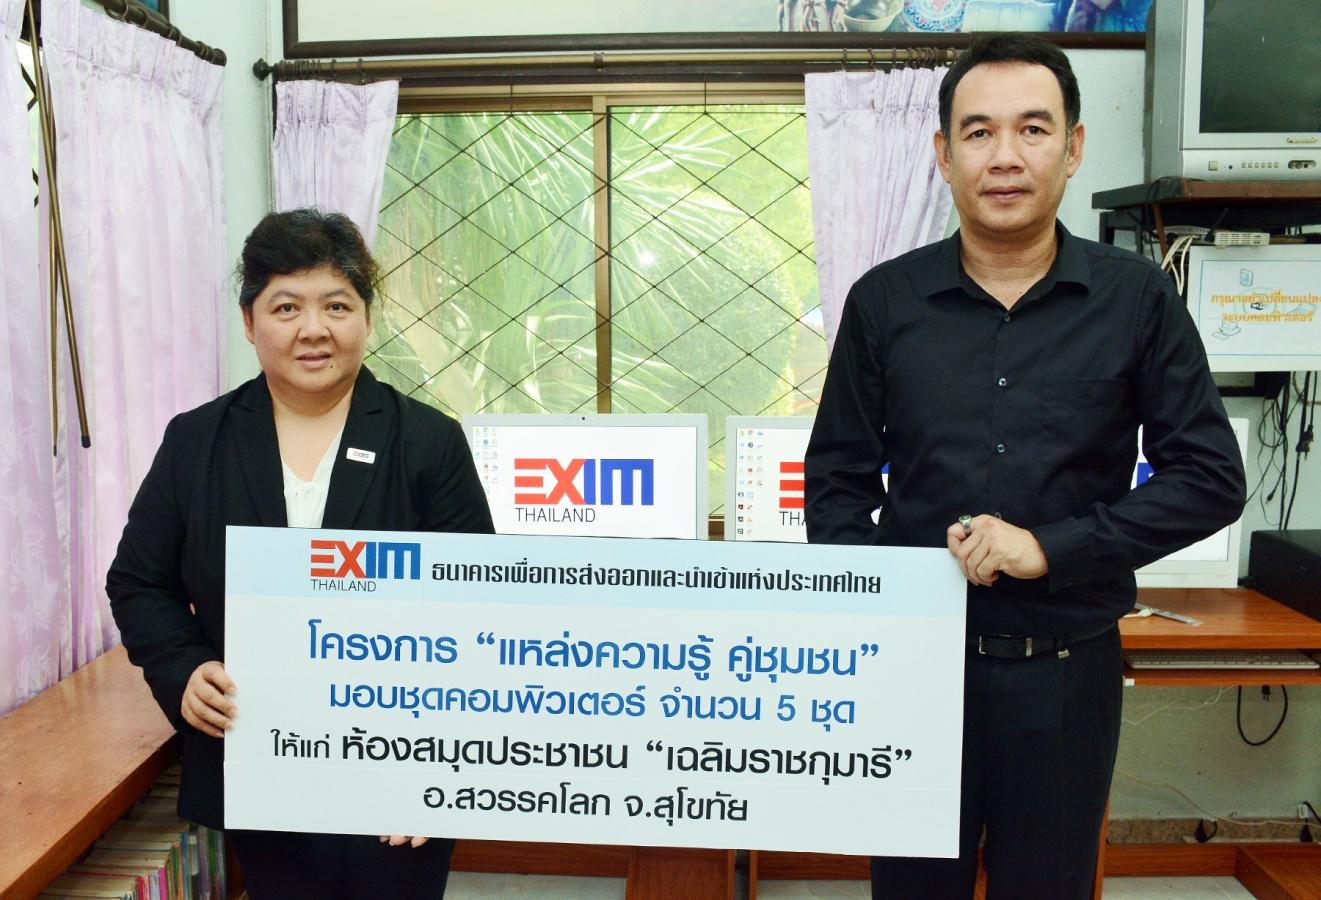 EXIM Thailand Donates Computers to “Chalerm Rajakumari” Public Library in Sawankalok, Sukhothai